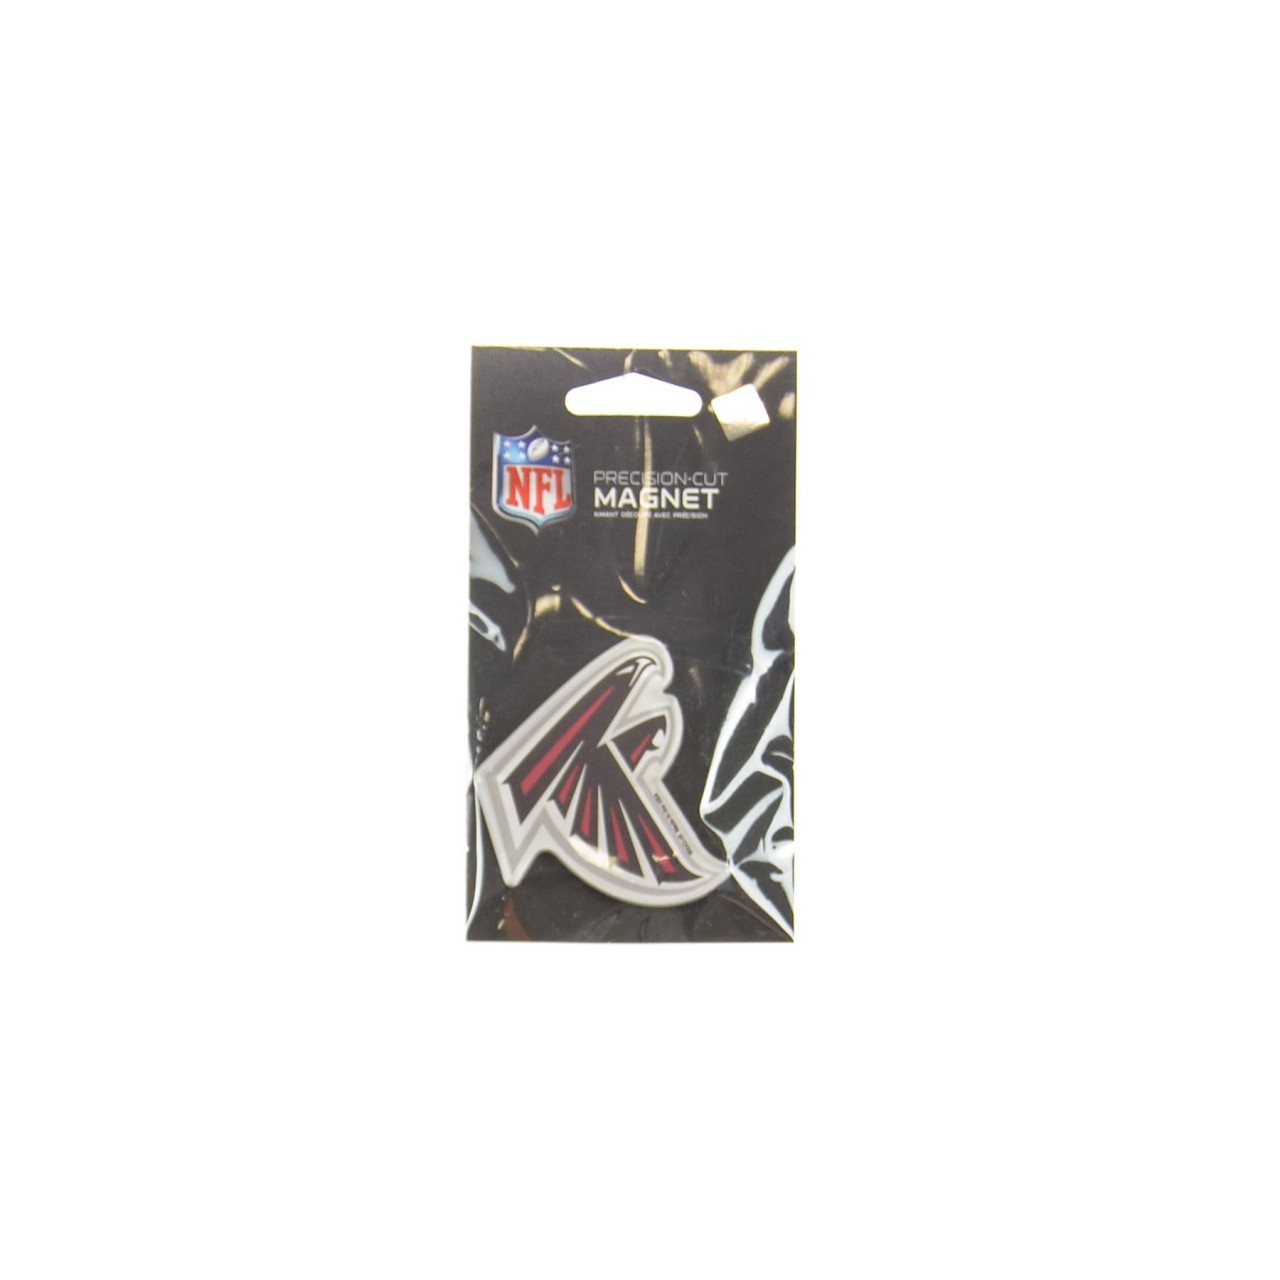 WINCRAFT NFL MAGNET LOGO ATLFAL 100032085206893